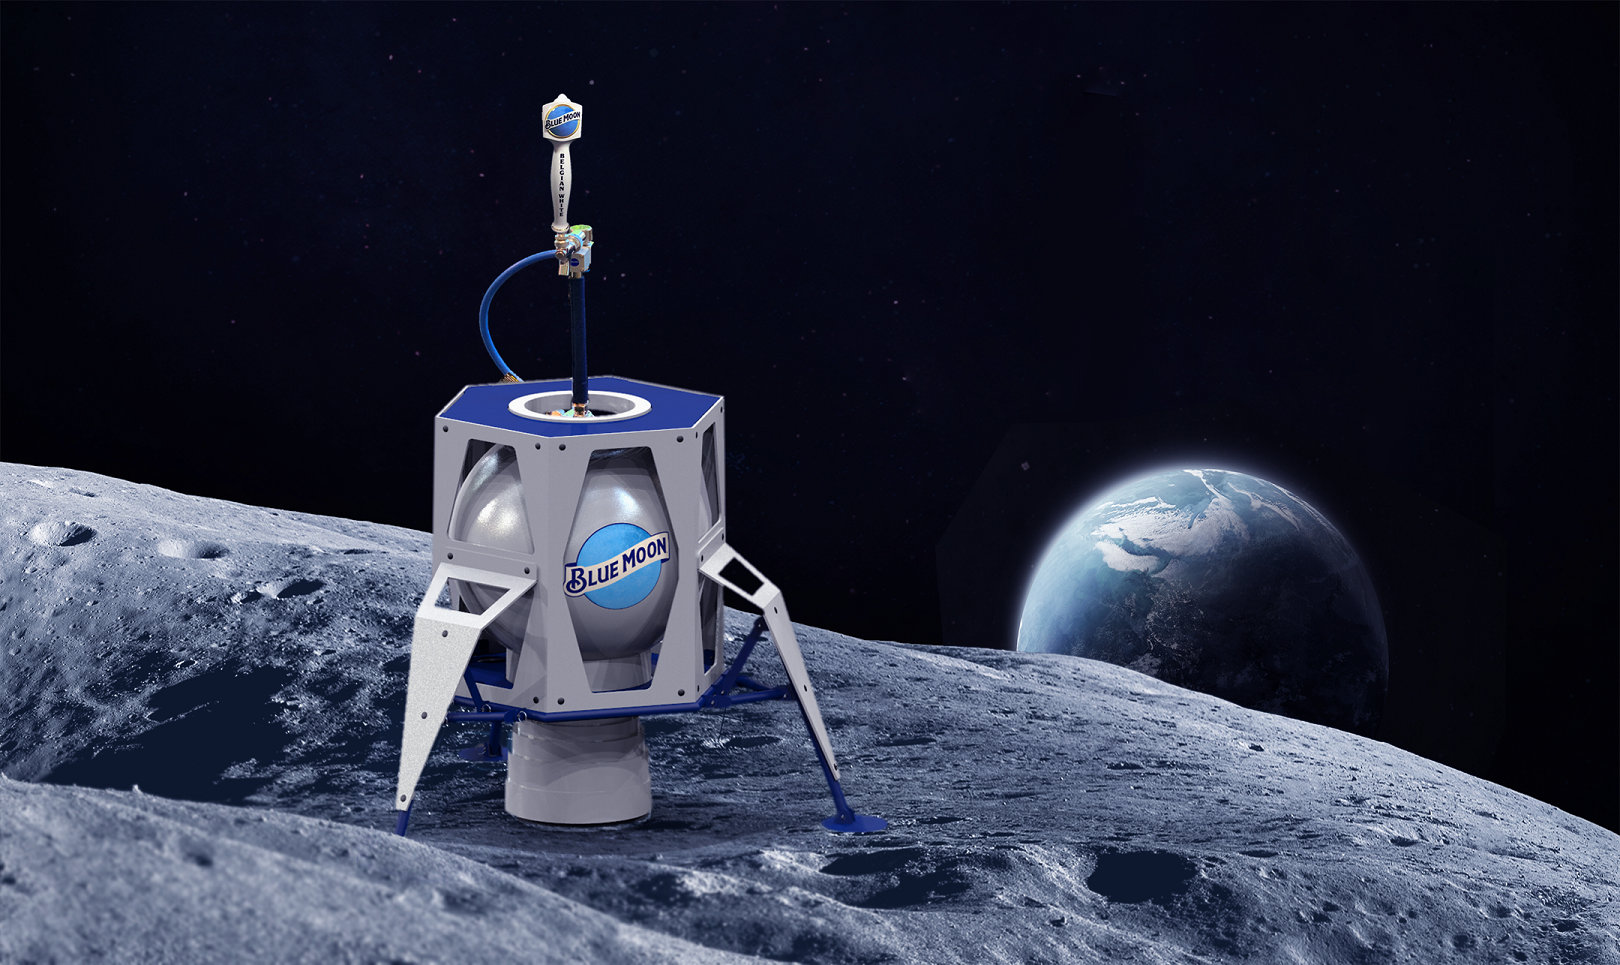 Blue Moon Lunar Lander Keg